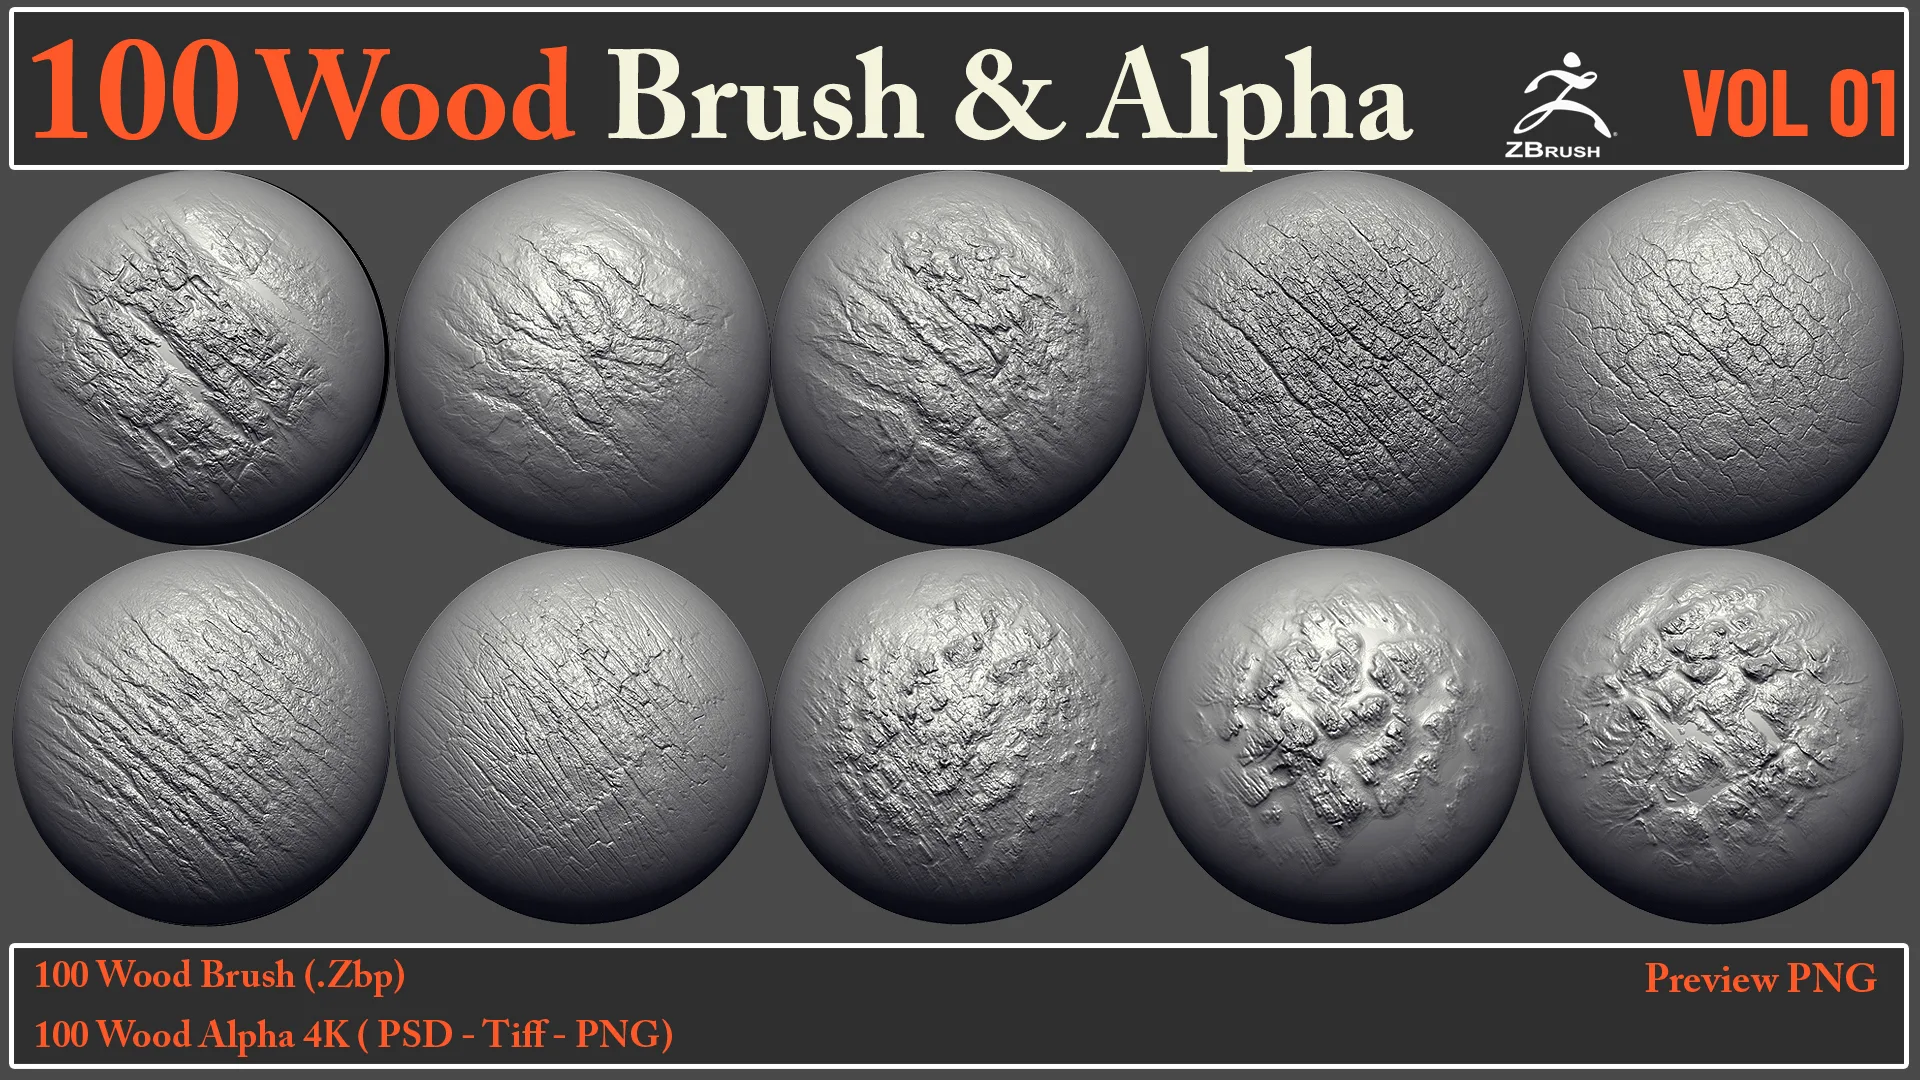 100 Wood Brush & Alpha VOL 01